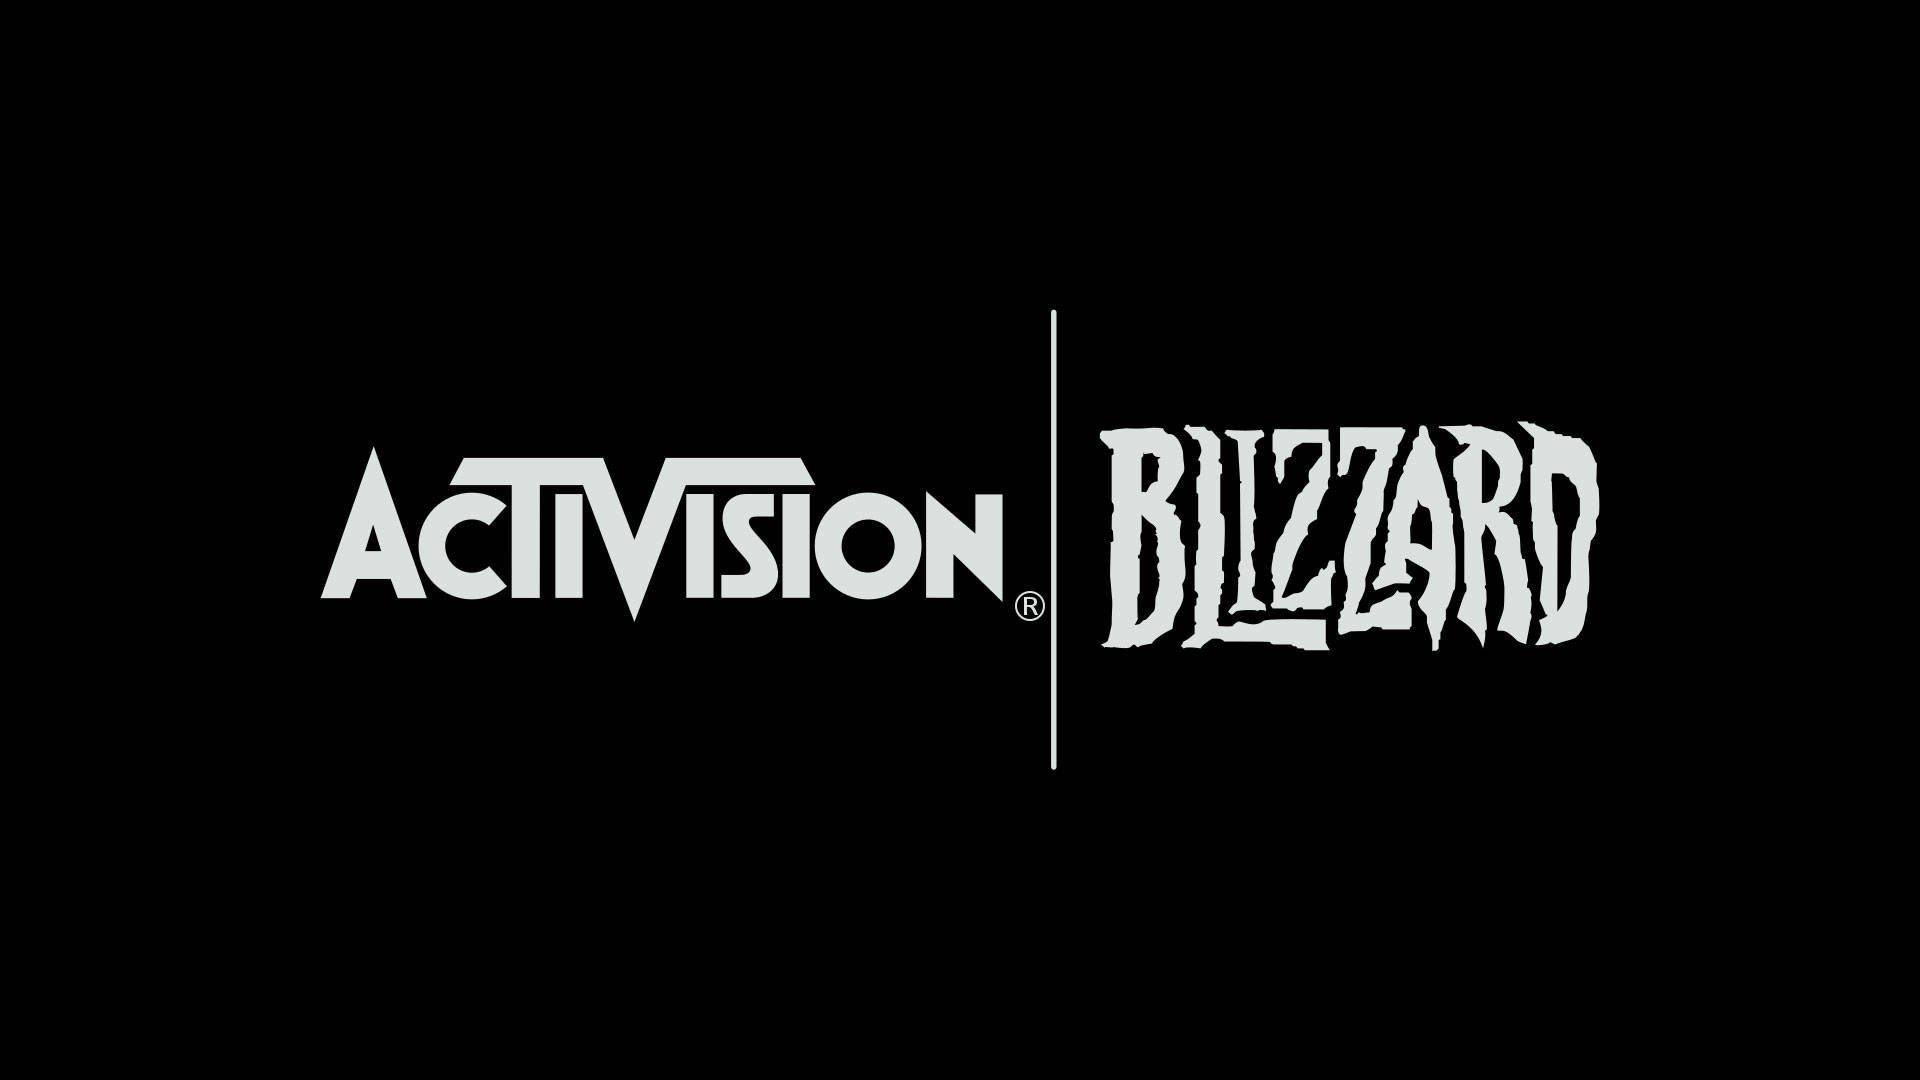 Activision Blizzard лишилась сотрудничества с Astro Gaming и армией США